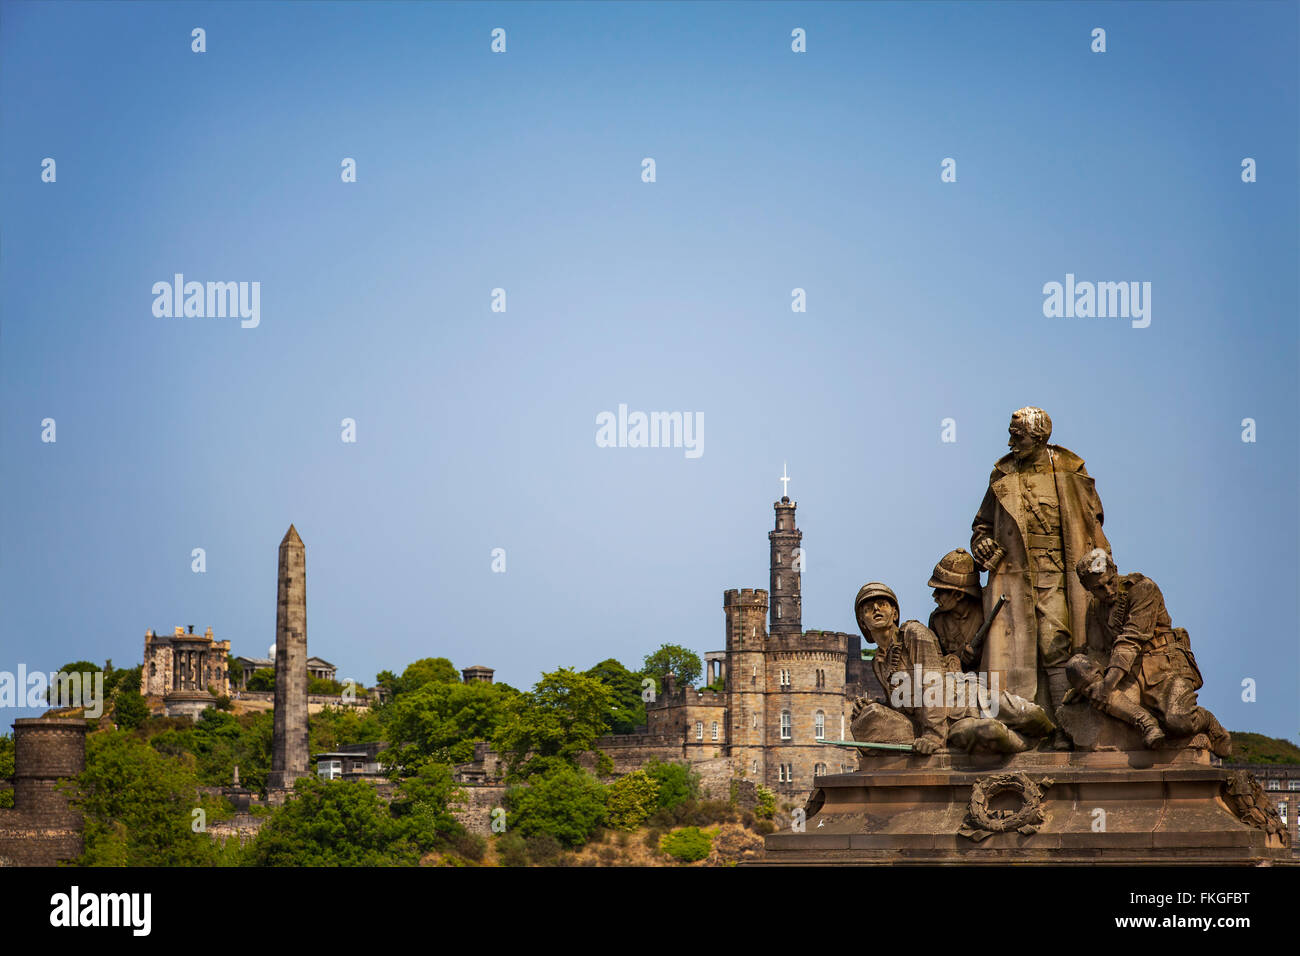 Image of a war memorial overlooking the city of Edinburgh, Scotland. Stock Photo